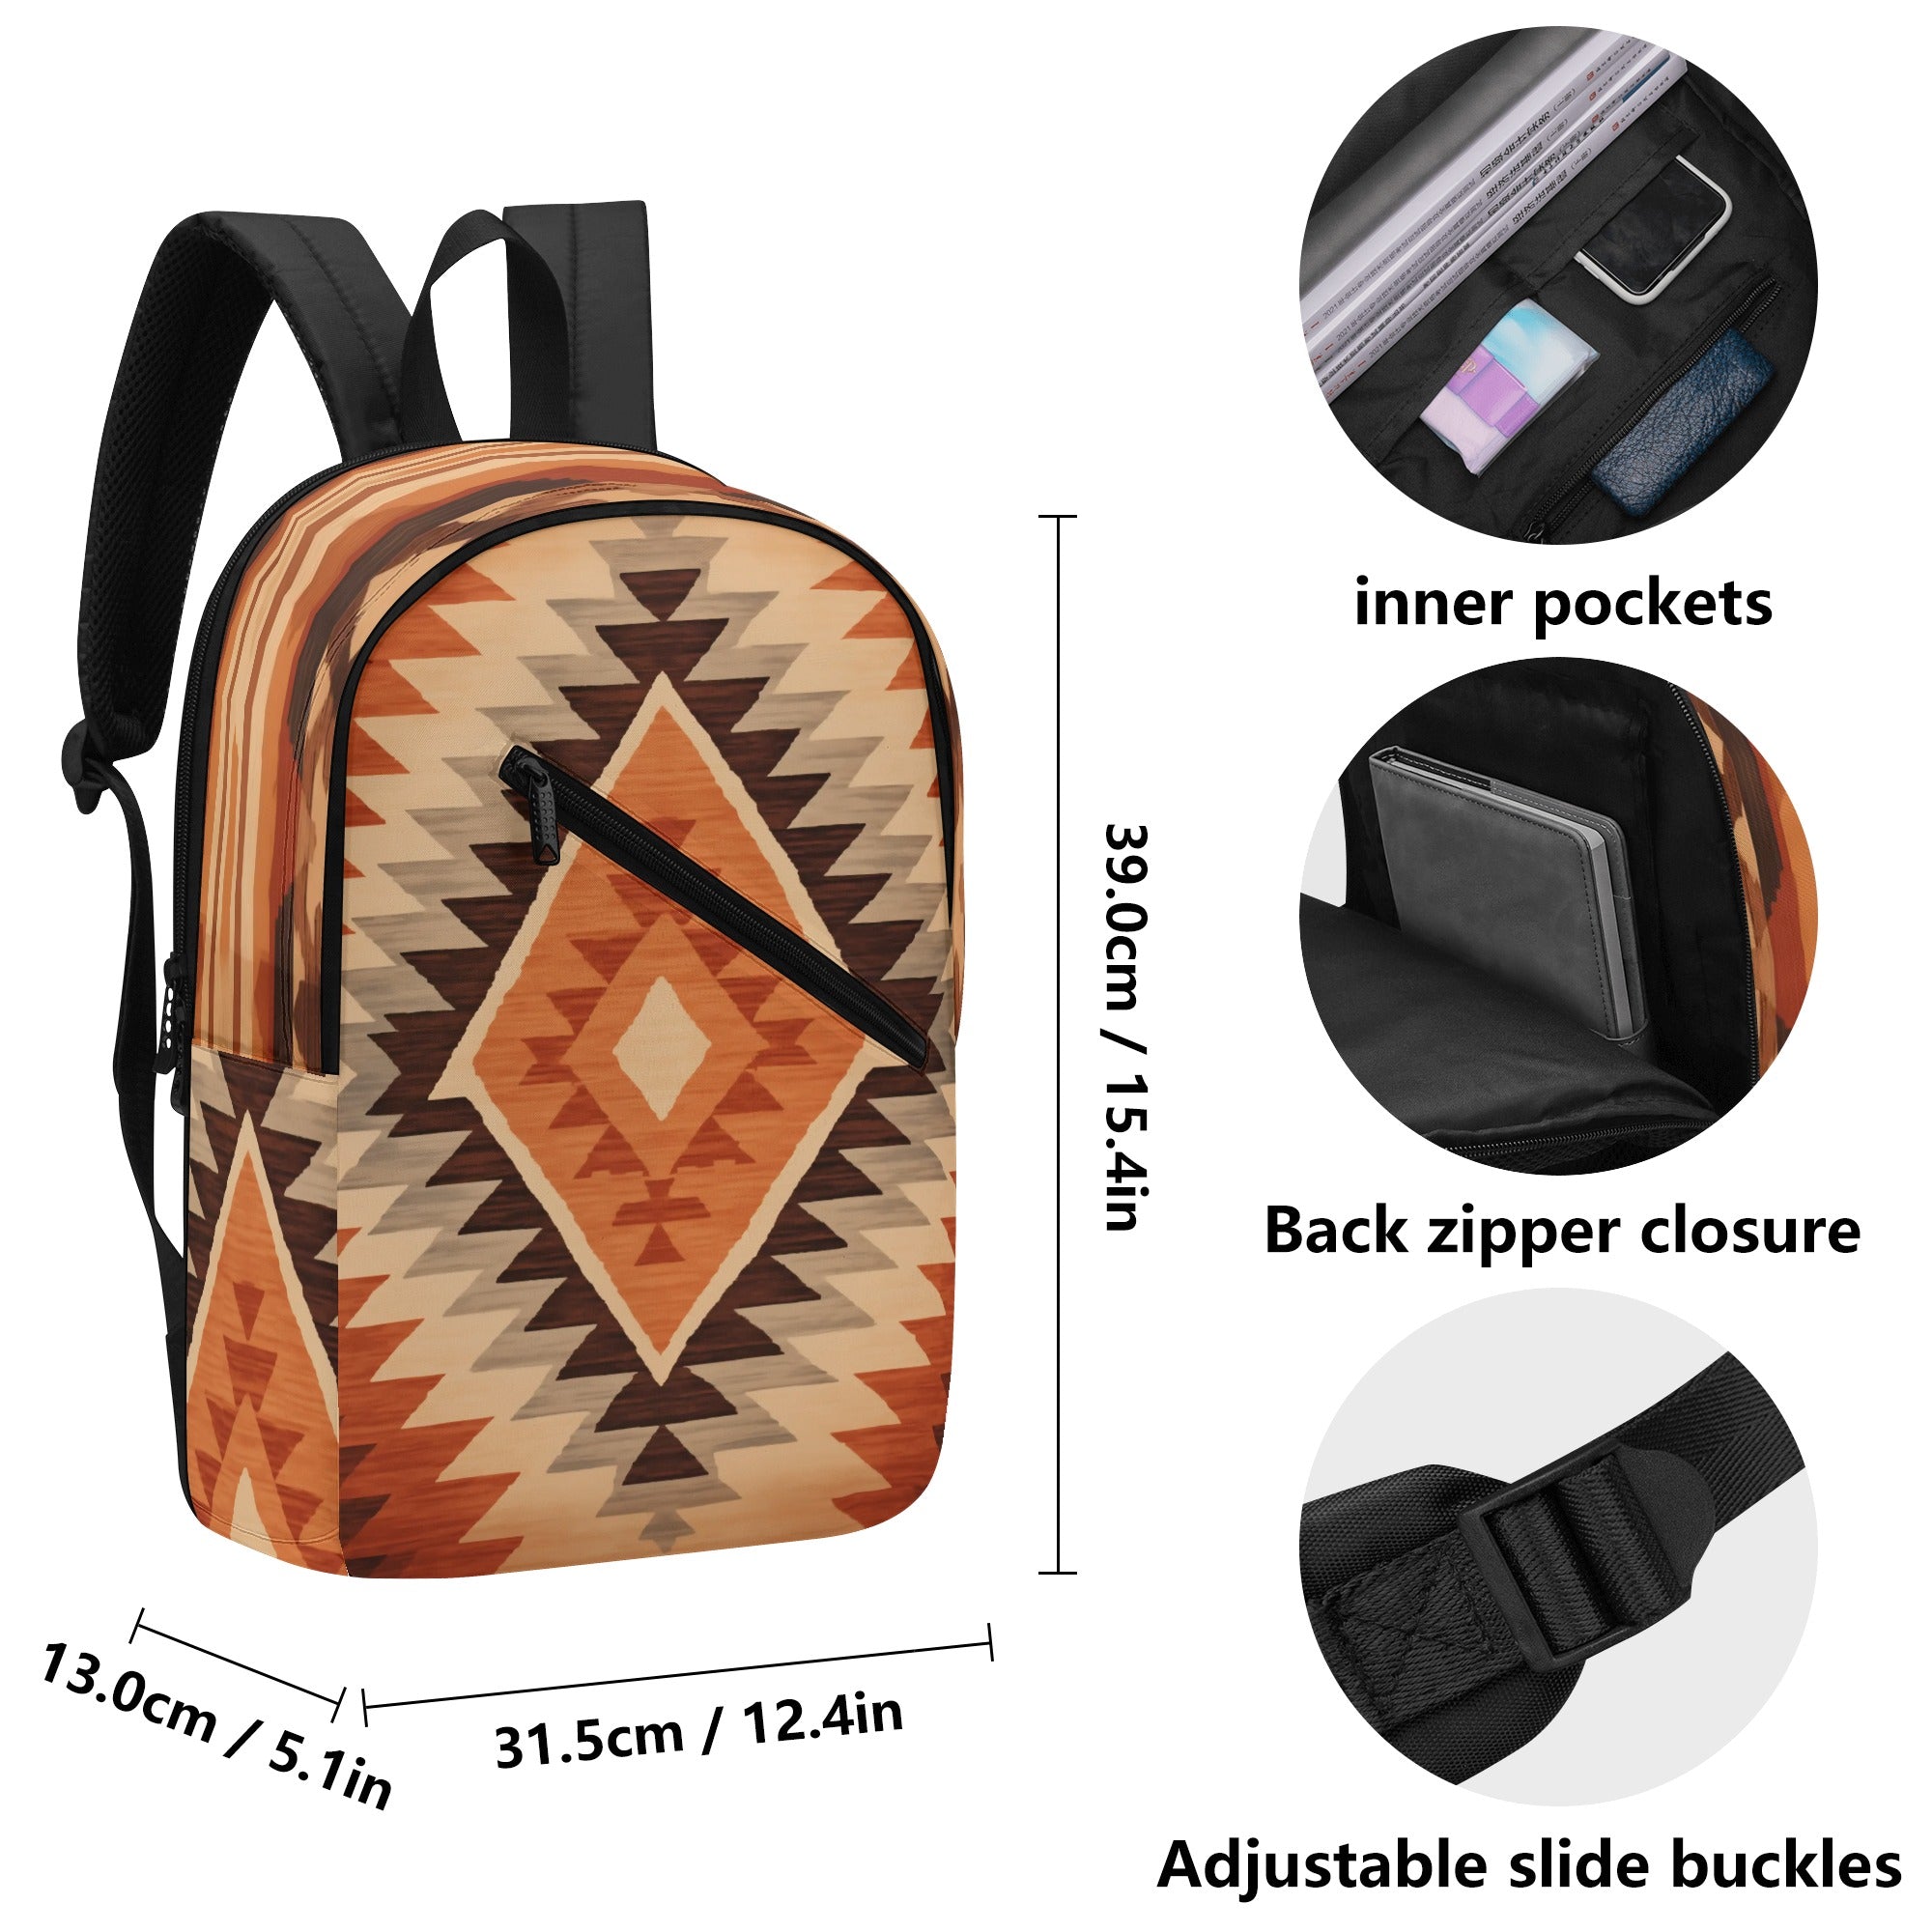 Southwestern Inspired Pattern Backpack - Brown